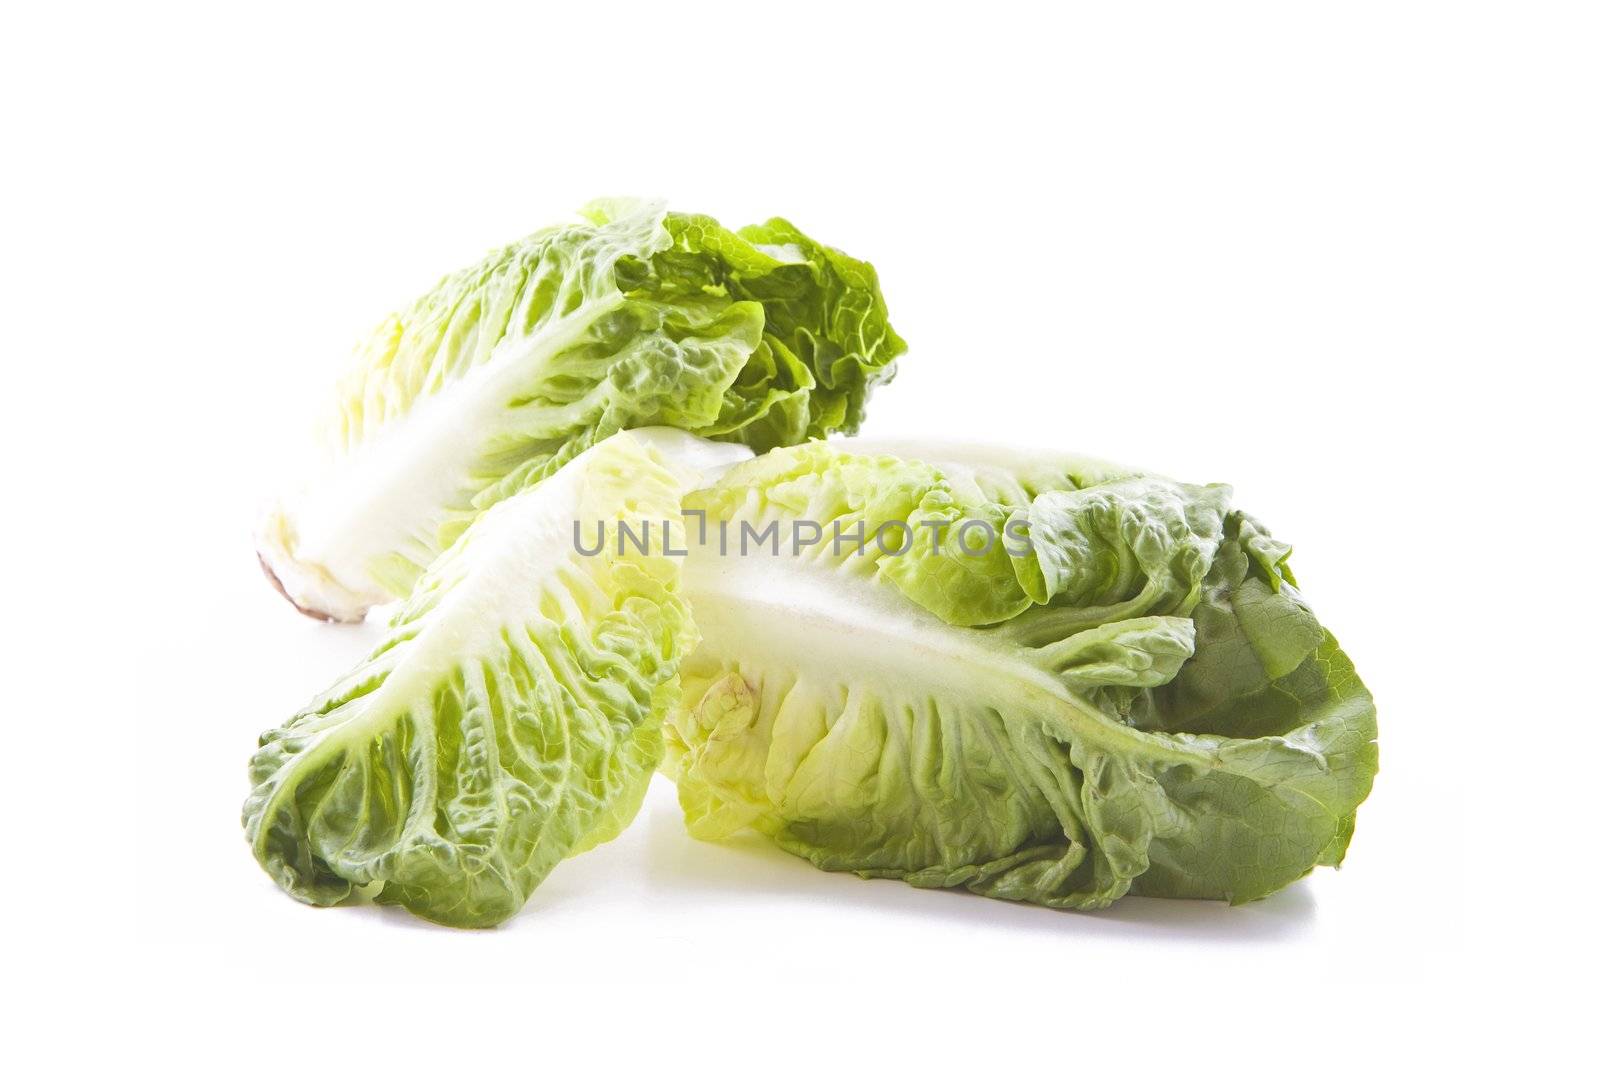 Fresh lettuce by Gbuglok